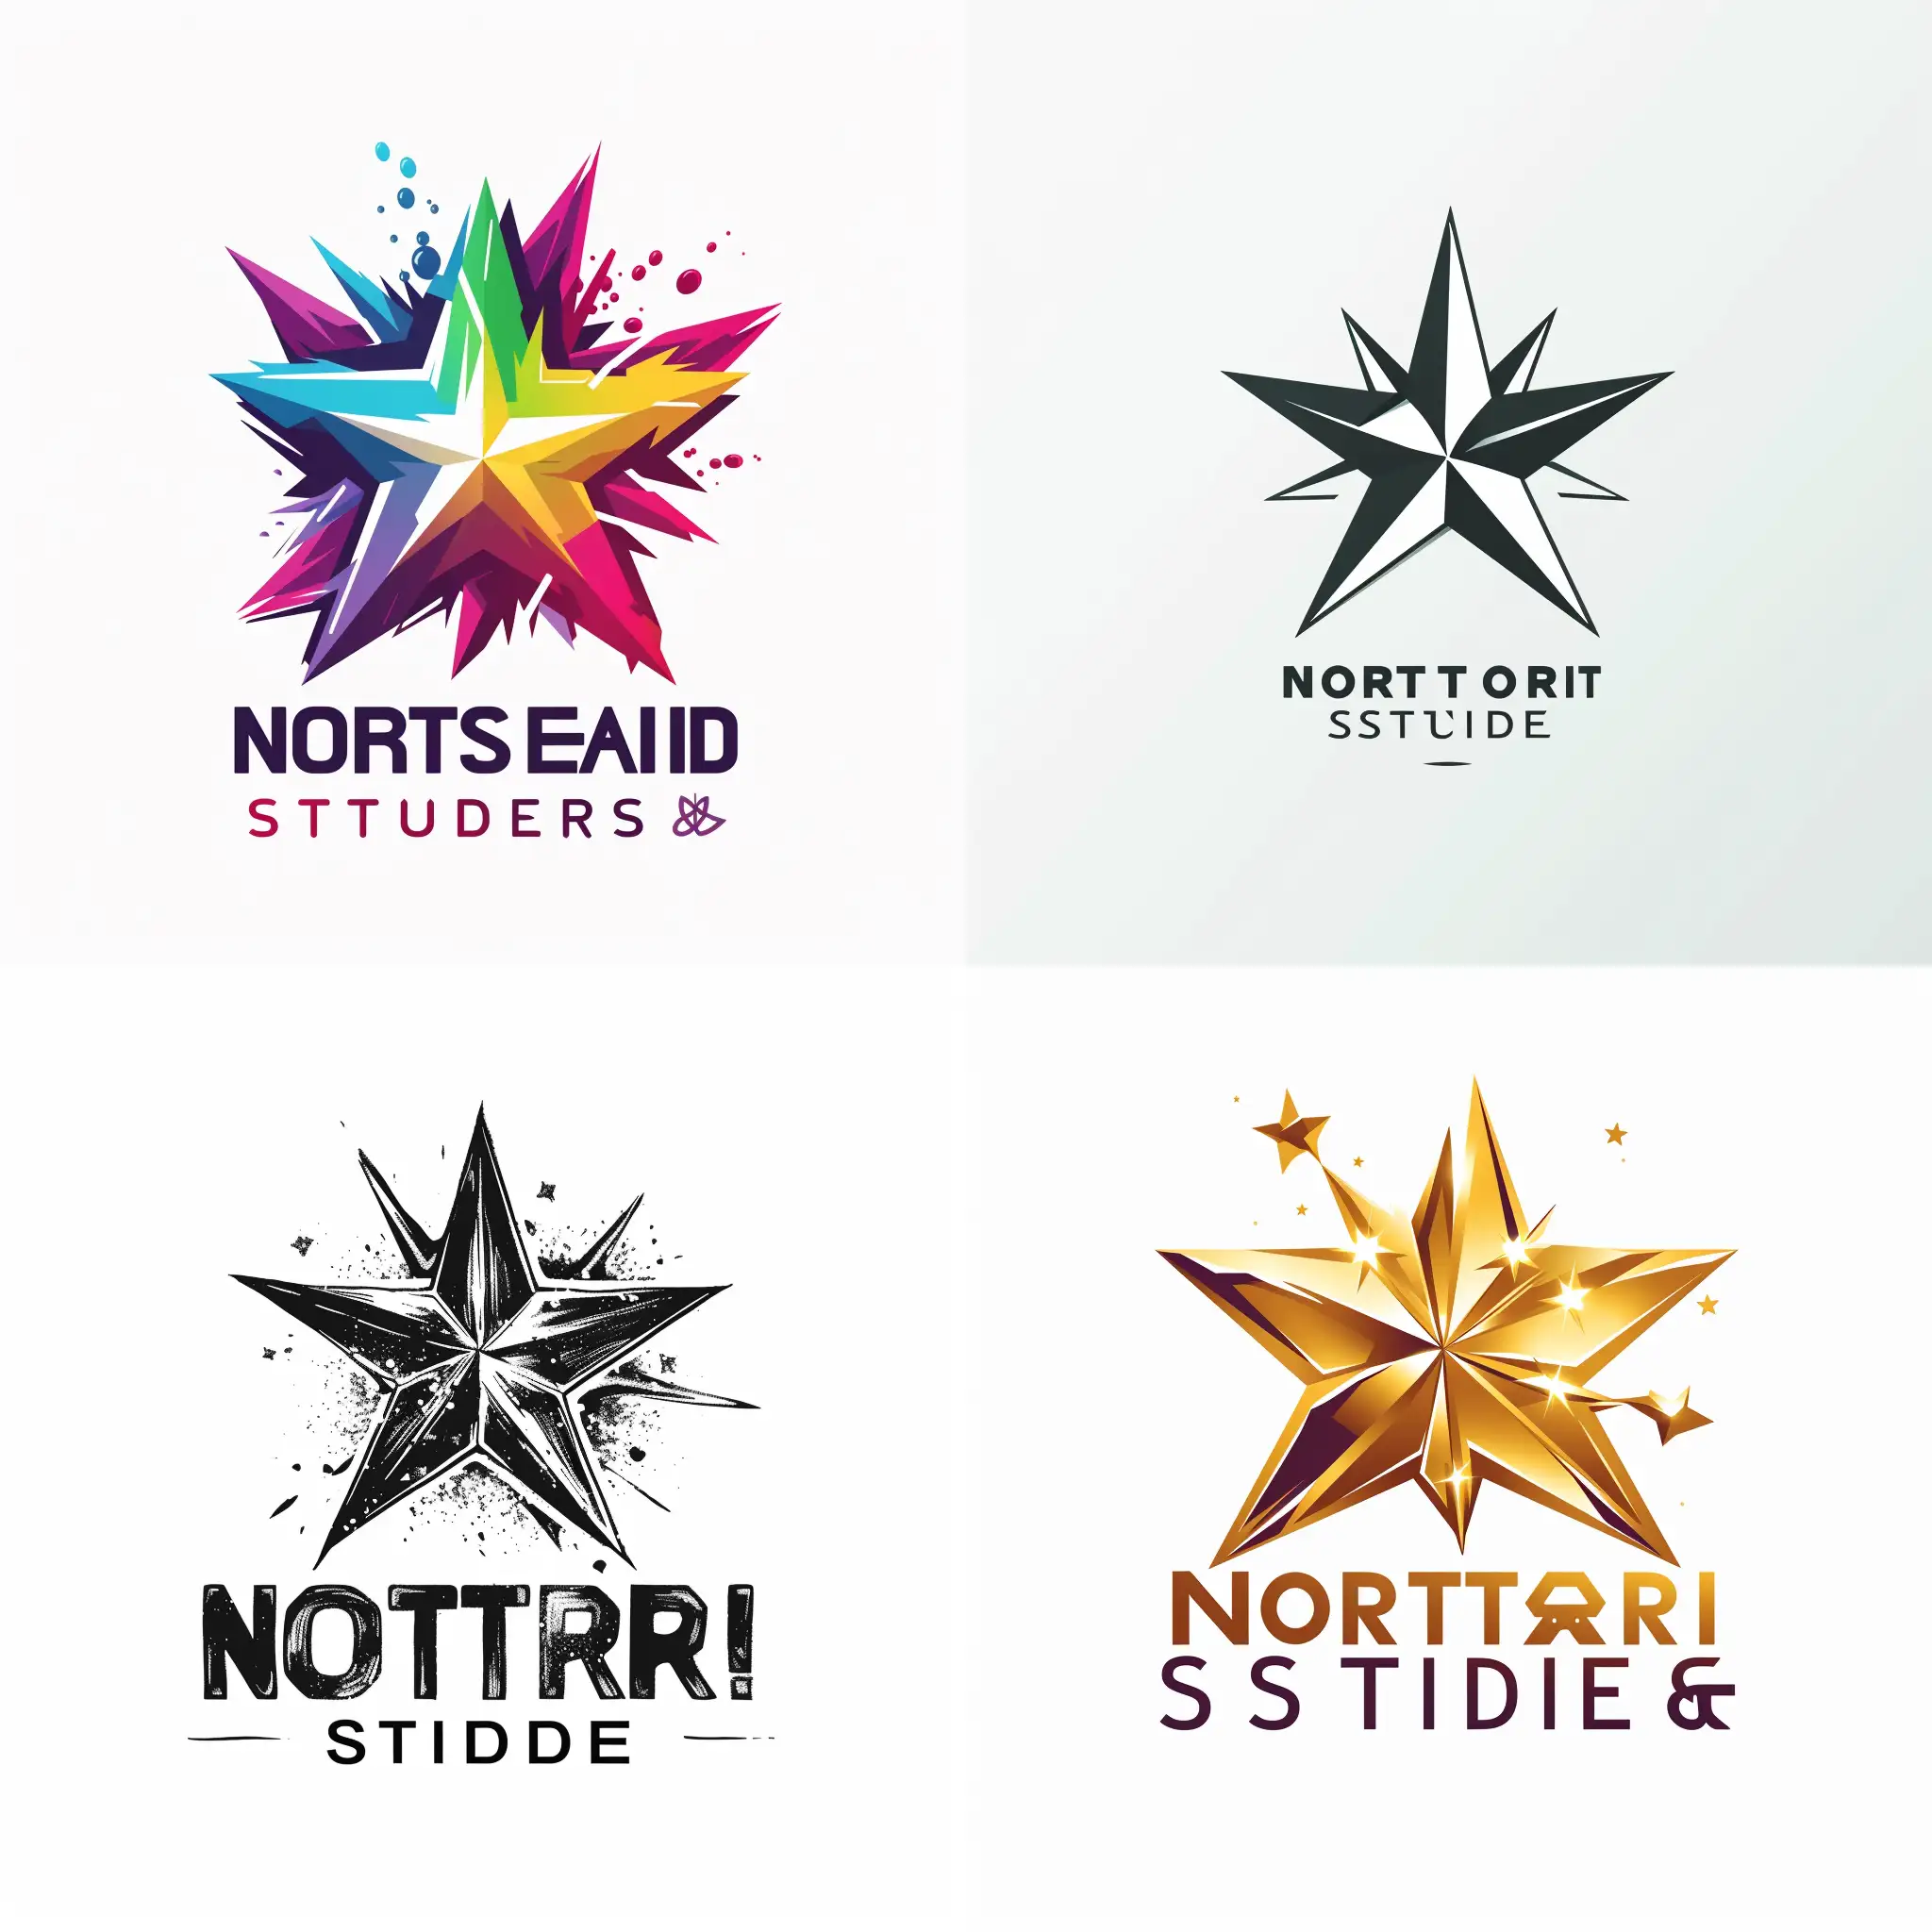 Innovative-Logo-Design-for-North-Star-Studios-Capturing-Creativity-on-a-White-Canvas